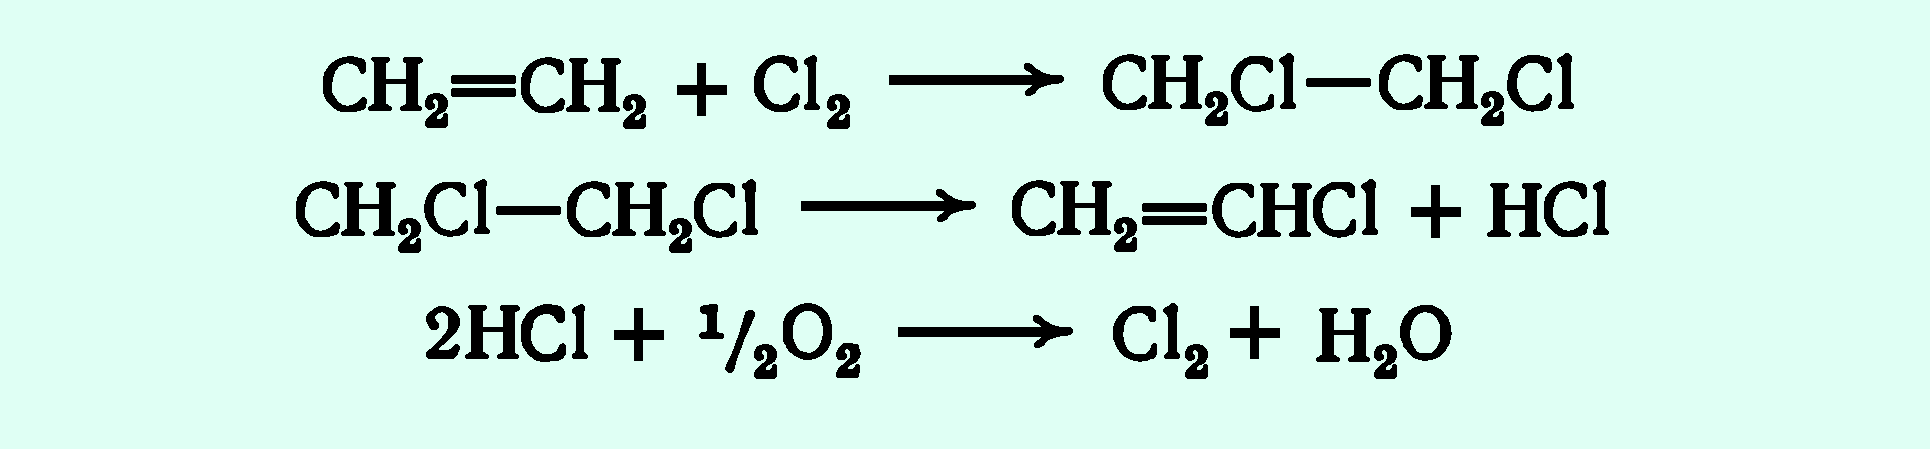 Поливинилхлорид реакции. Получение поливинилхлорида реакция. Винилхлорид из этилена реакция. Химические реакции получения поливинилхлорида из этилена. Поливинилхлорид формула получения.